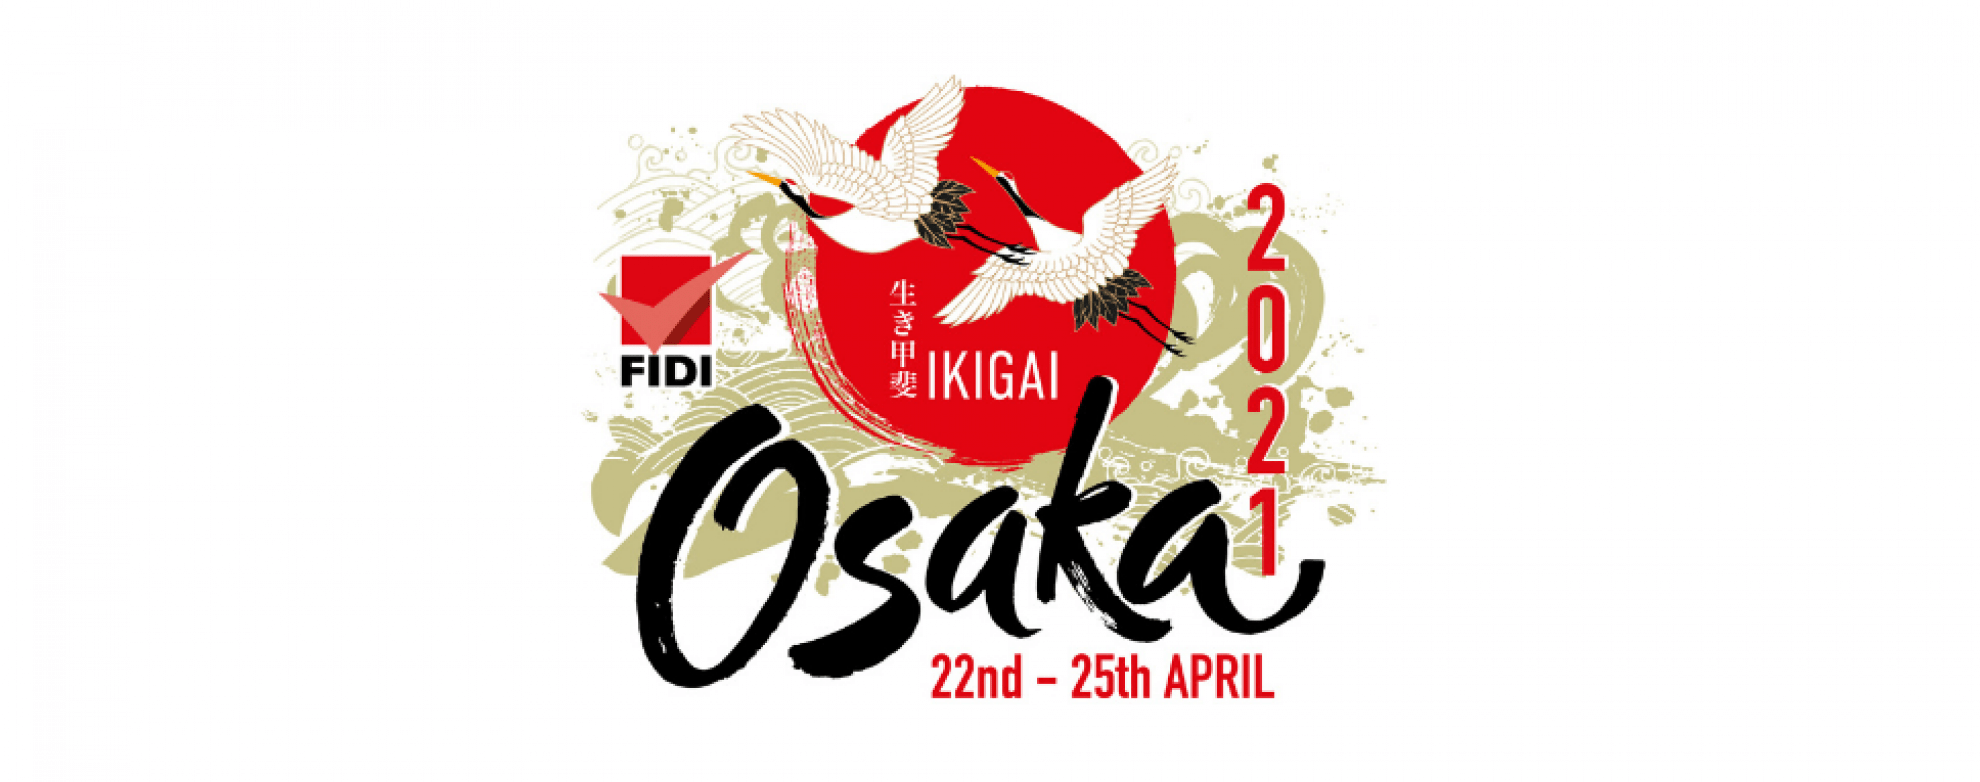 FIDI Conference - new dates announced